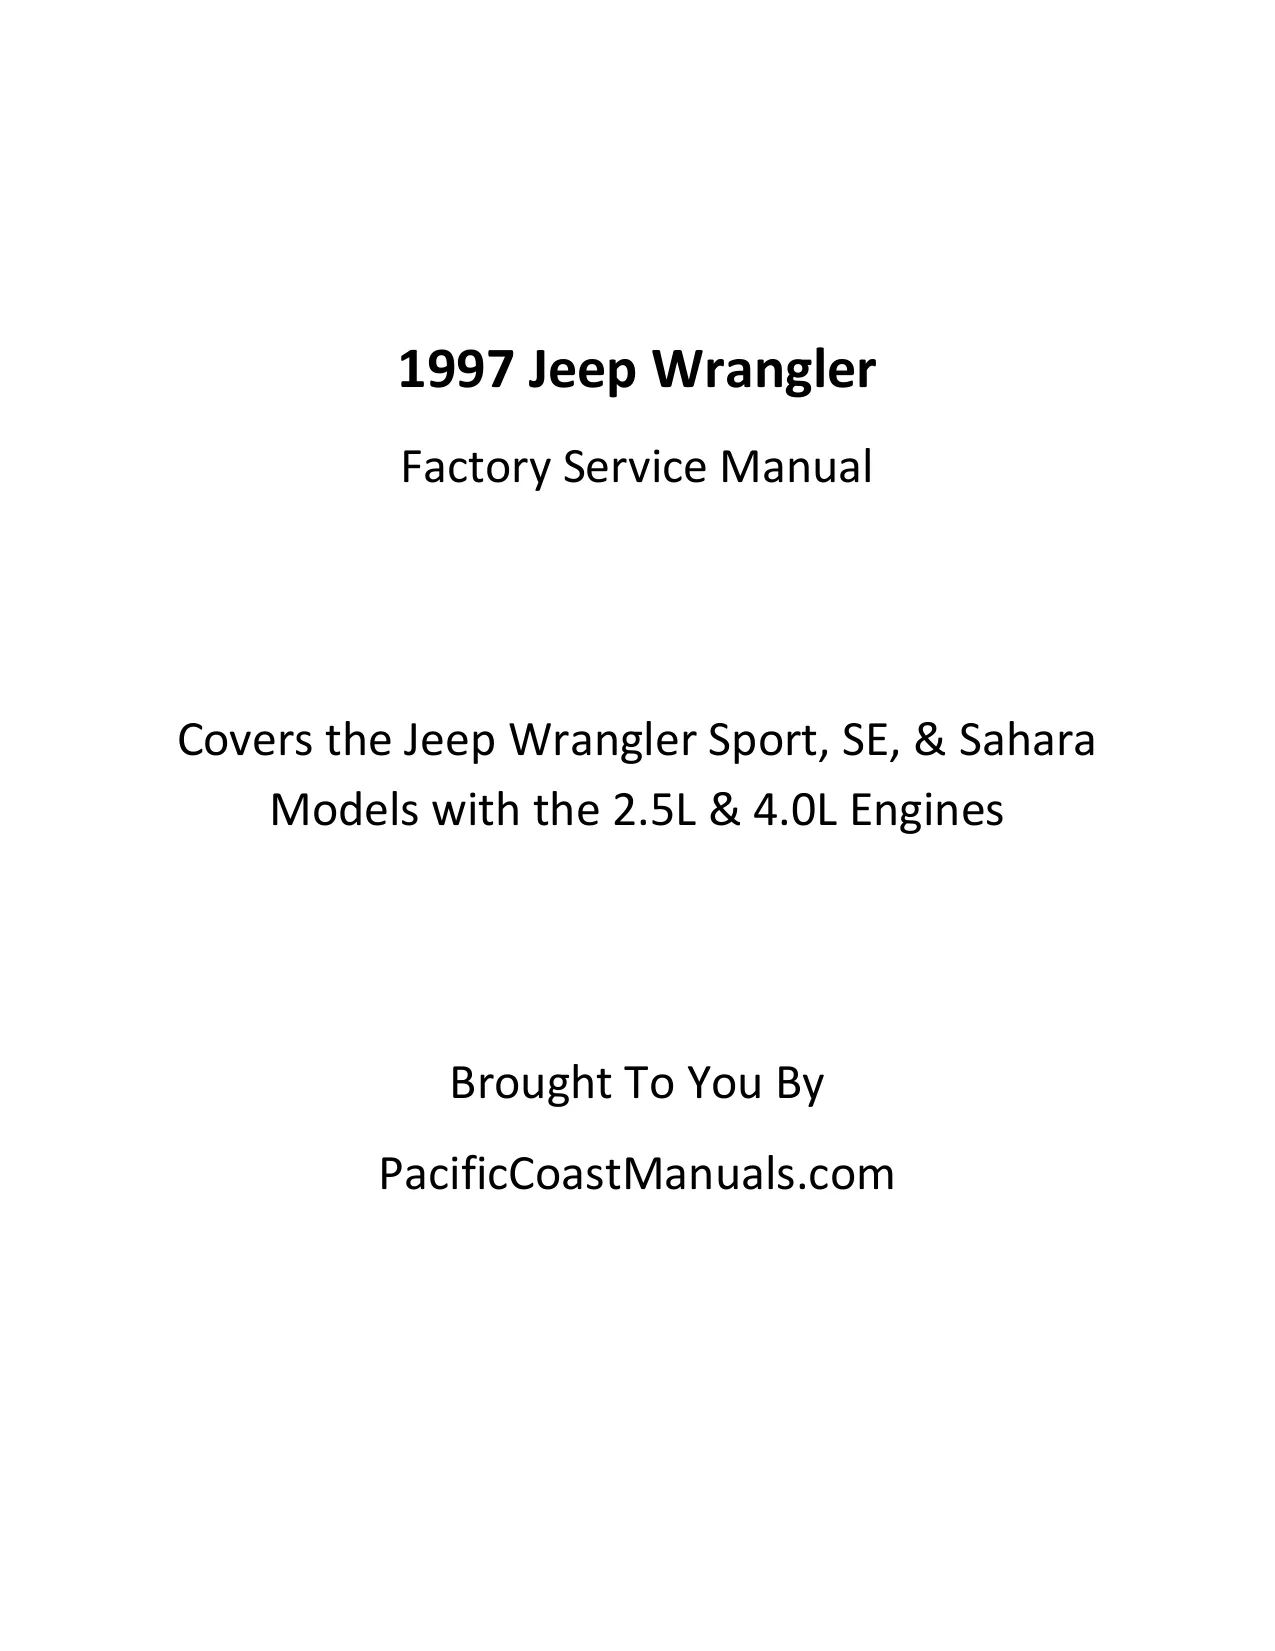 1997 Jeep Wrangler TJ shop manual Preview image 1